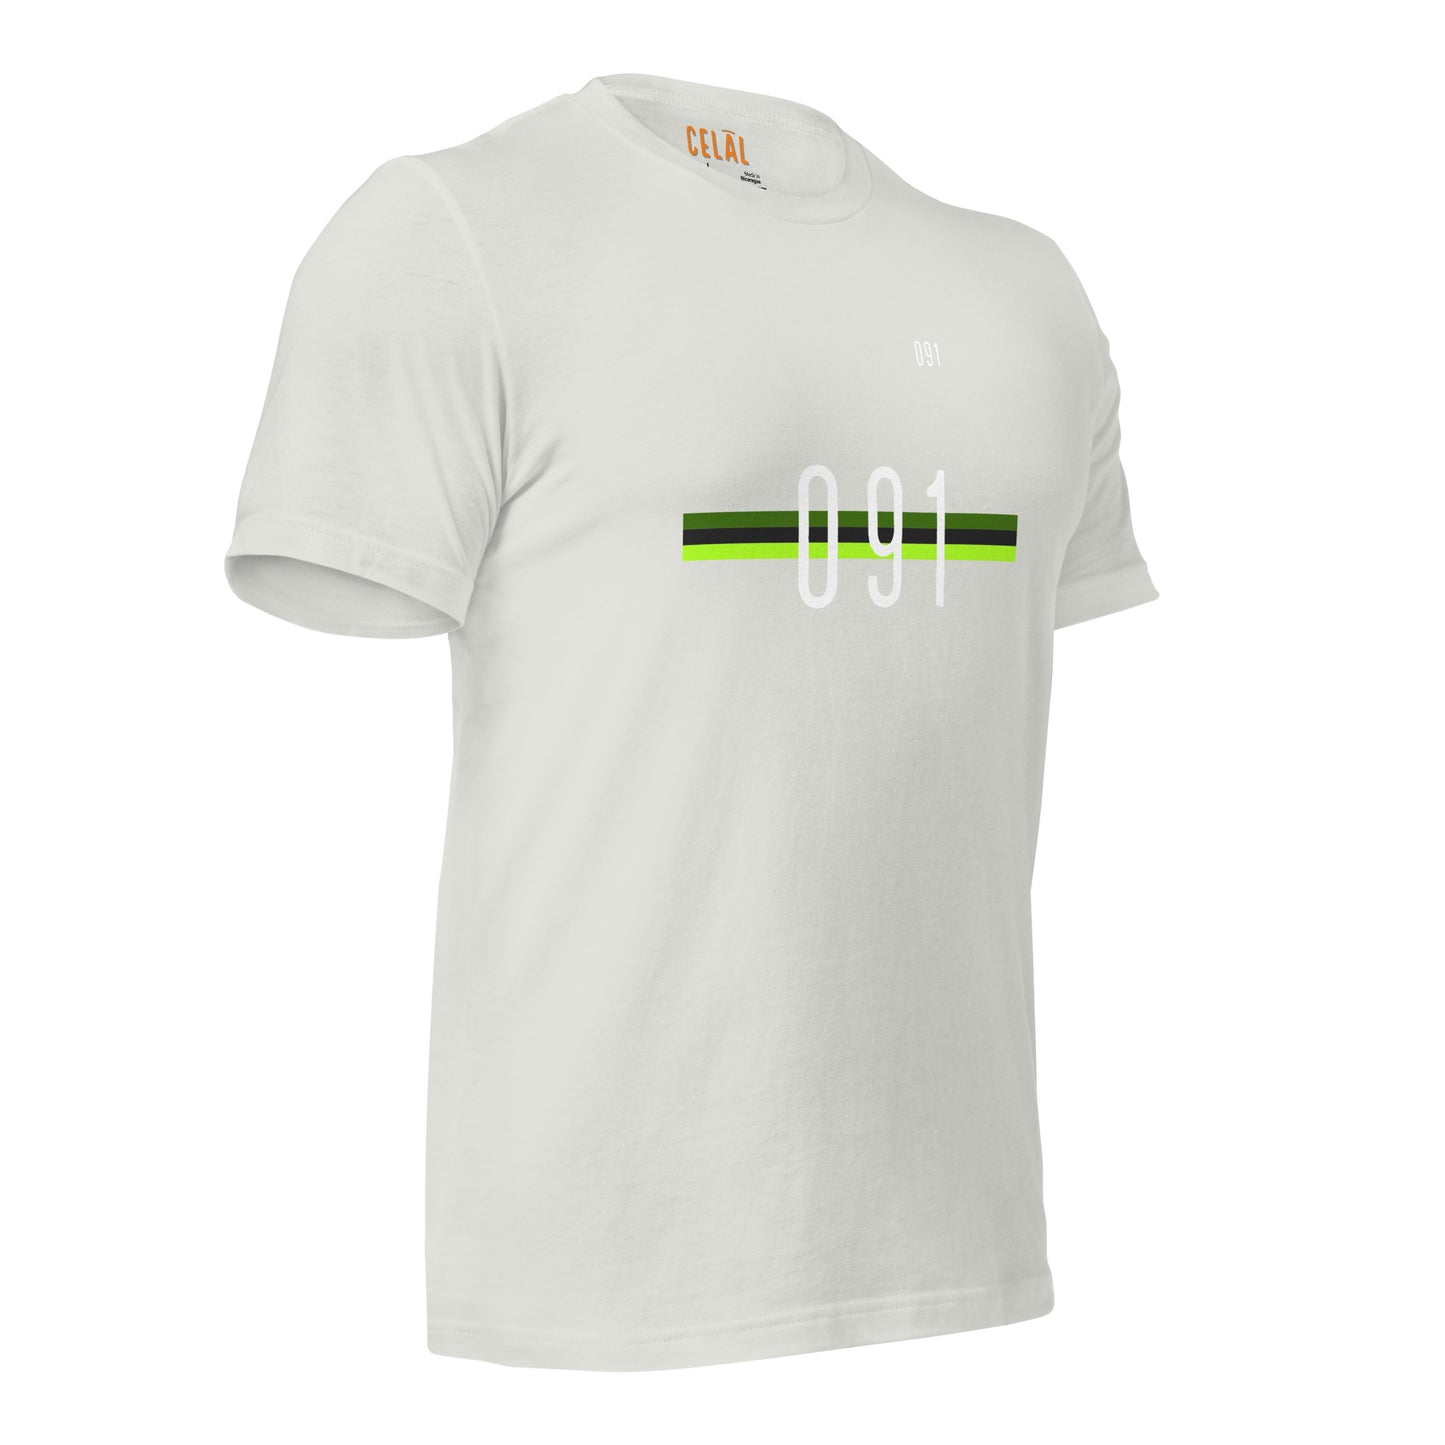 091 Unisex t-shirt